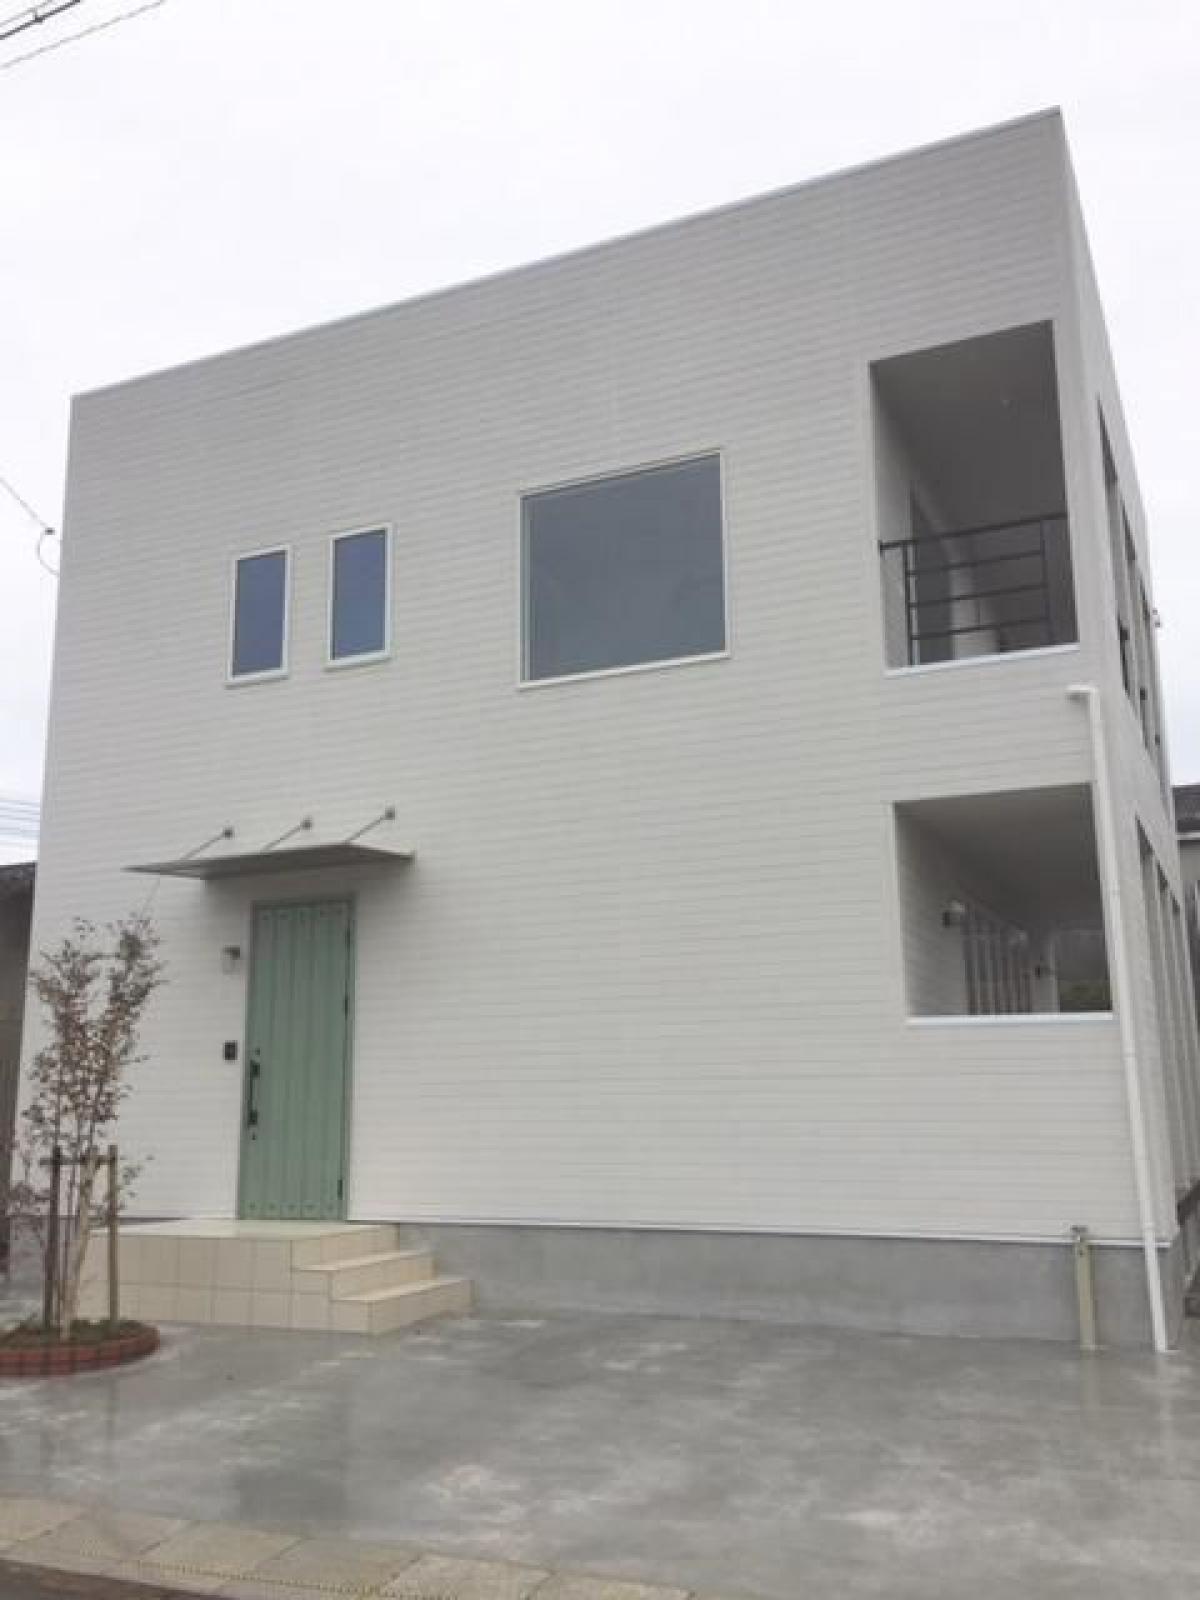 Picture of Home For Sale in Nichinan Shi, Miyazaki, Japan